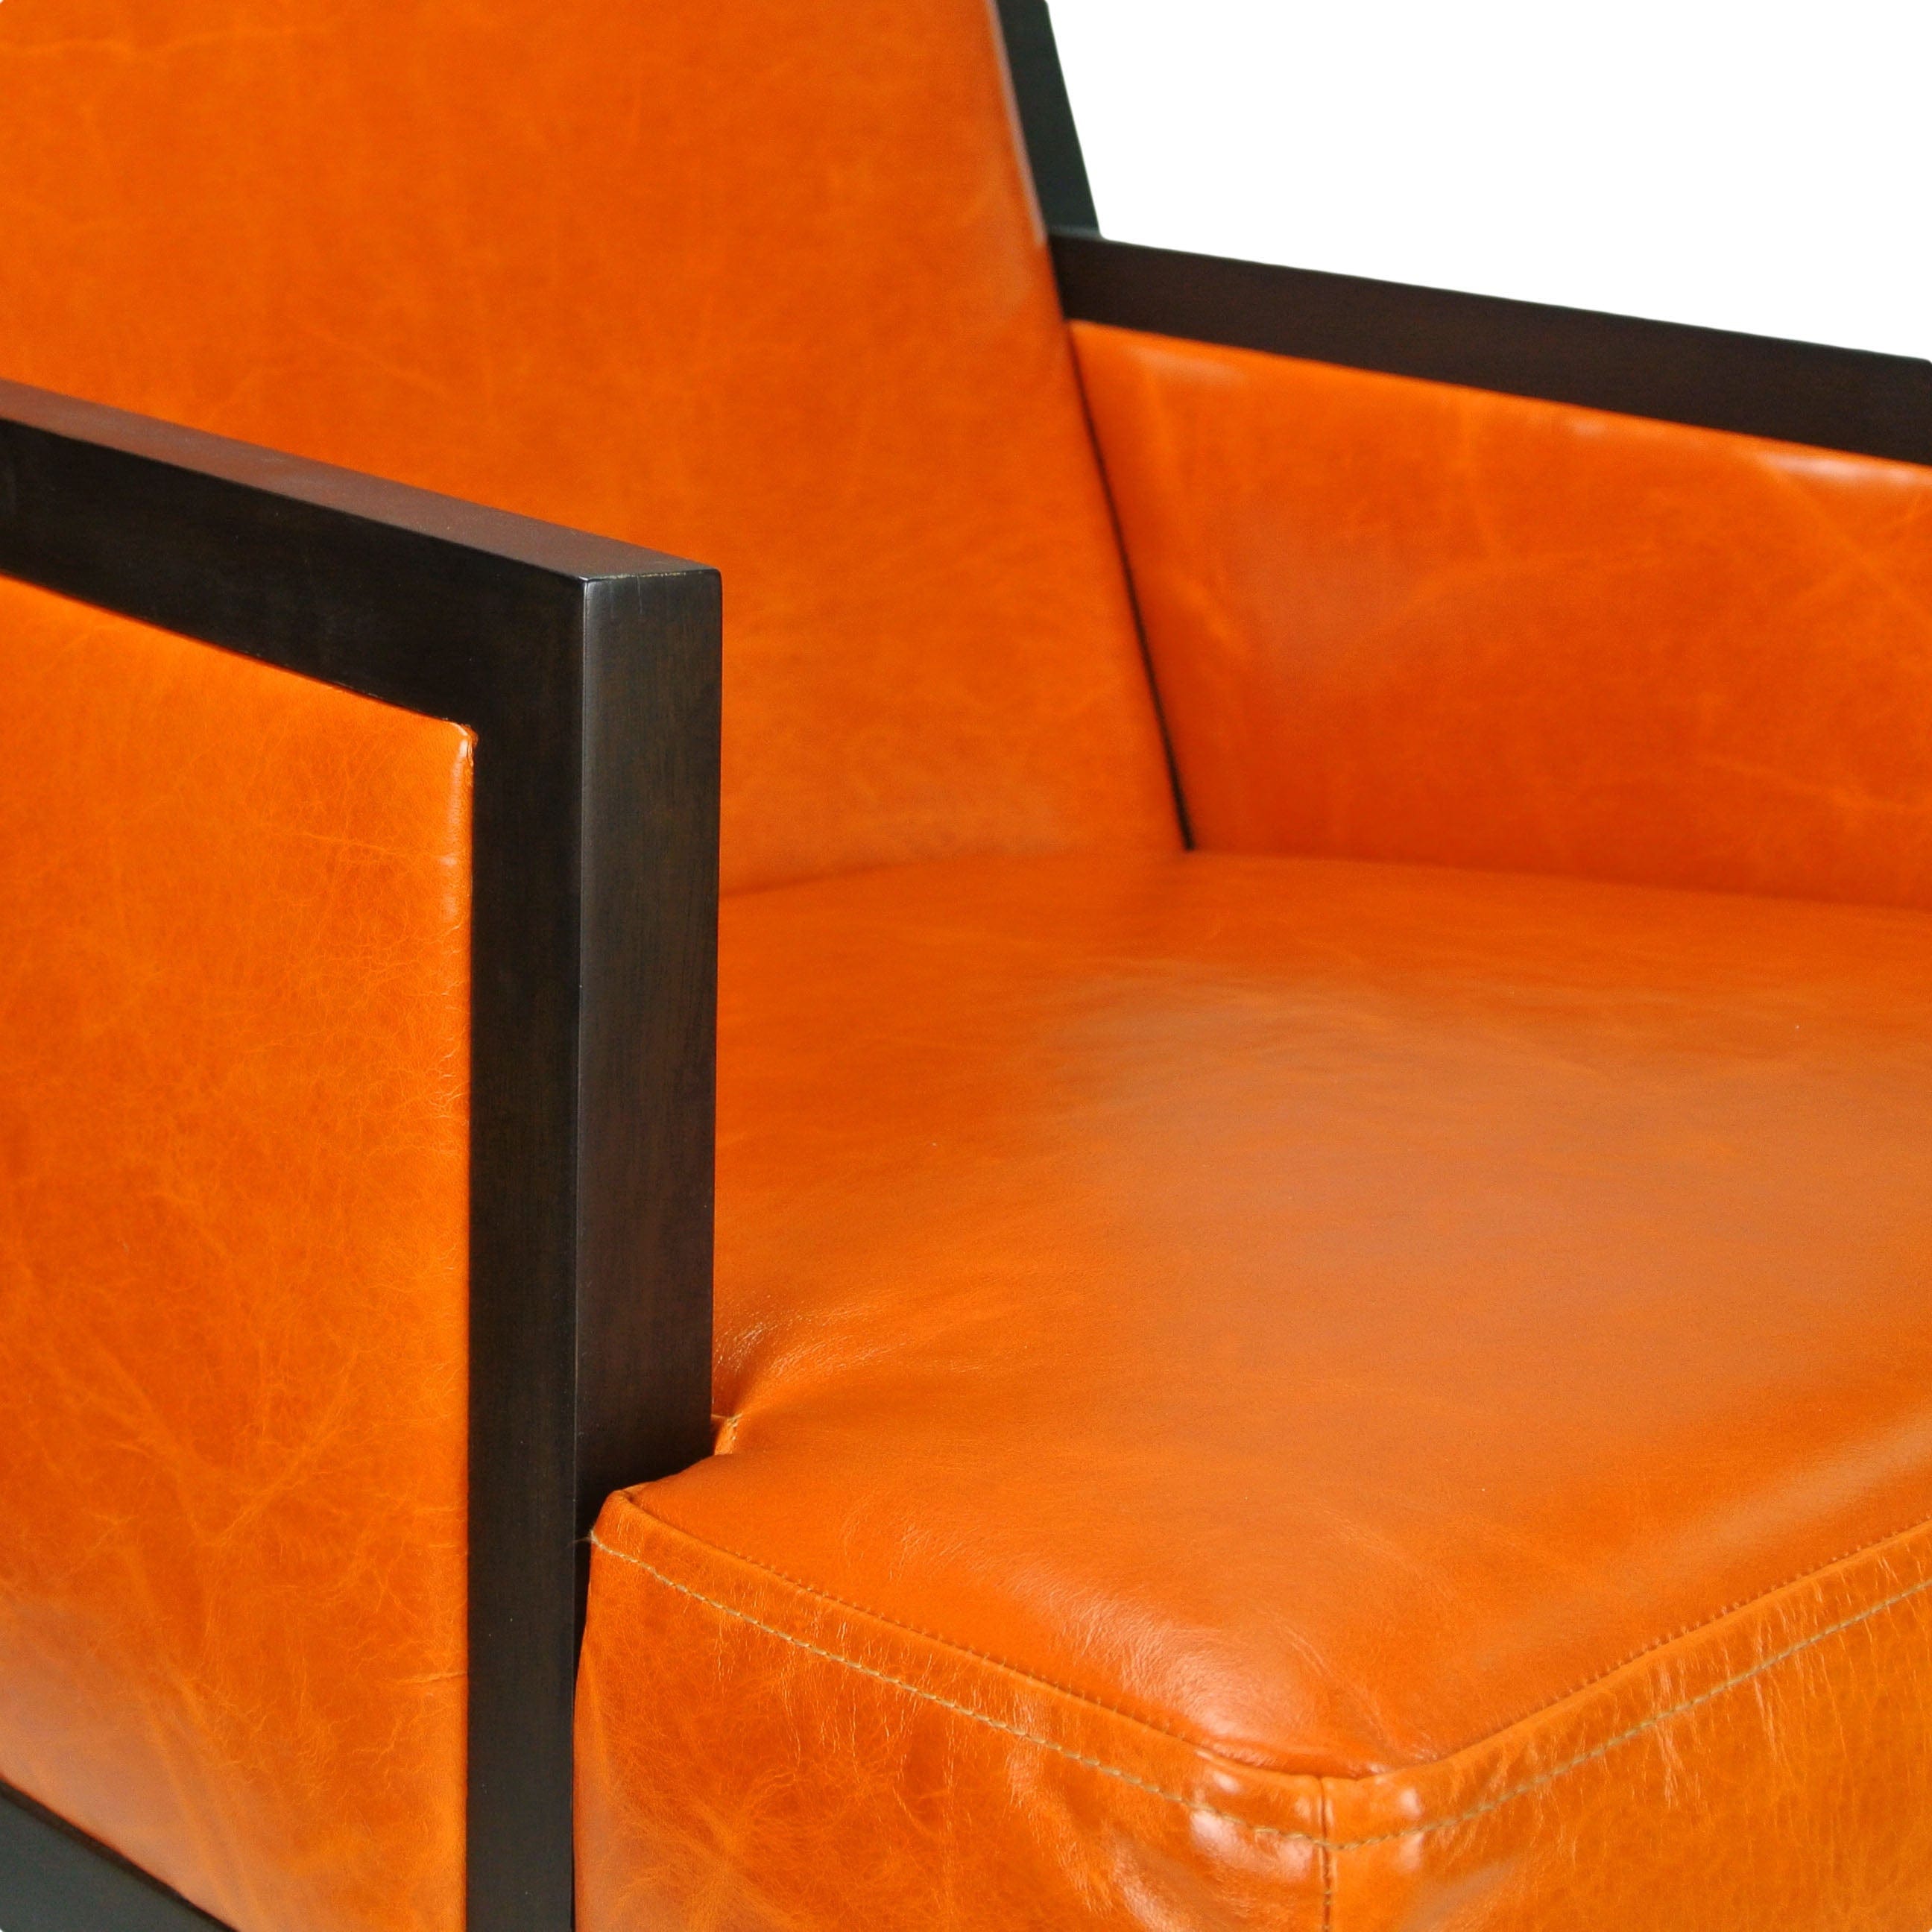 HomeShake Arm Chairs, Recliners & Sleeper Chairs Farleigh Armchair